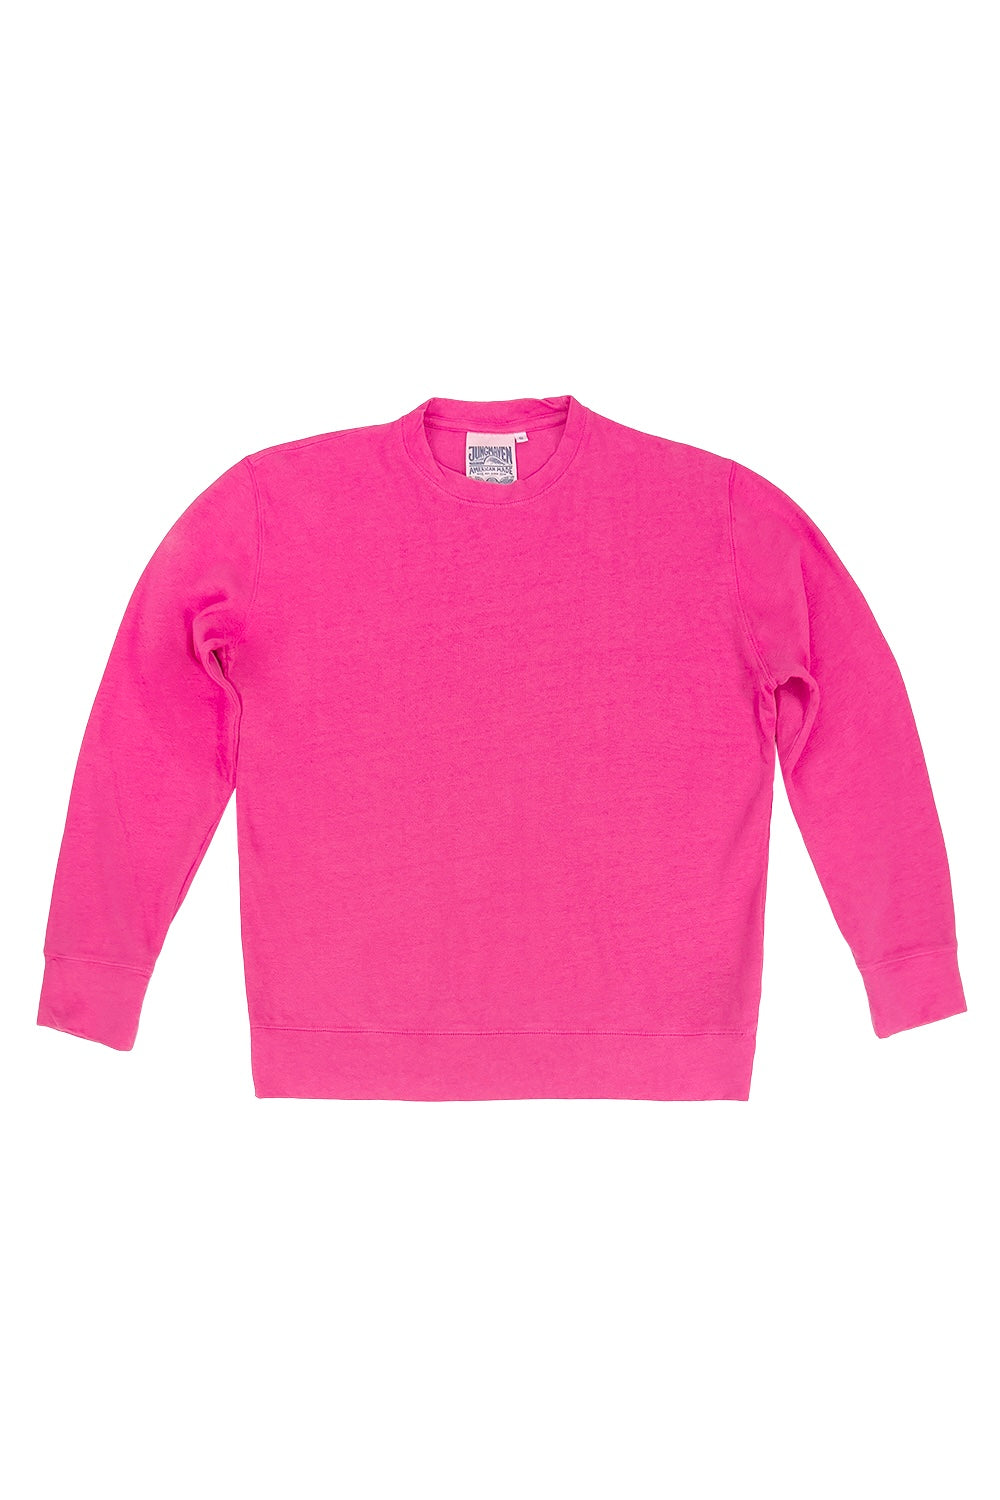 California Pullover | Jungmaven Hemp Clothing & Accessories / Color: Pink Grapefruit